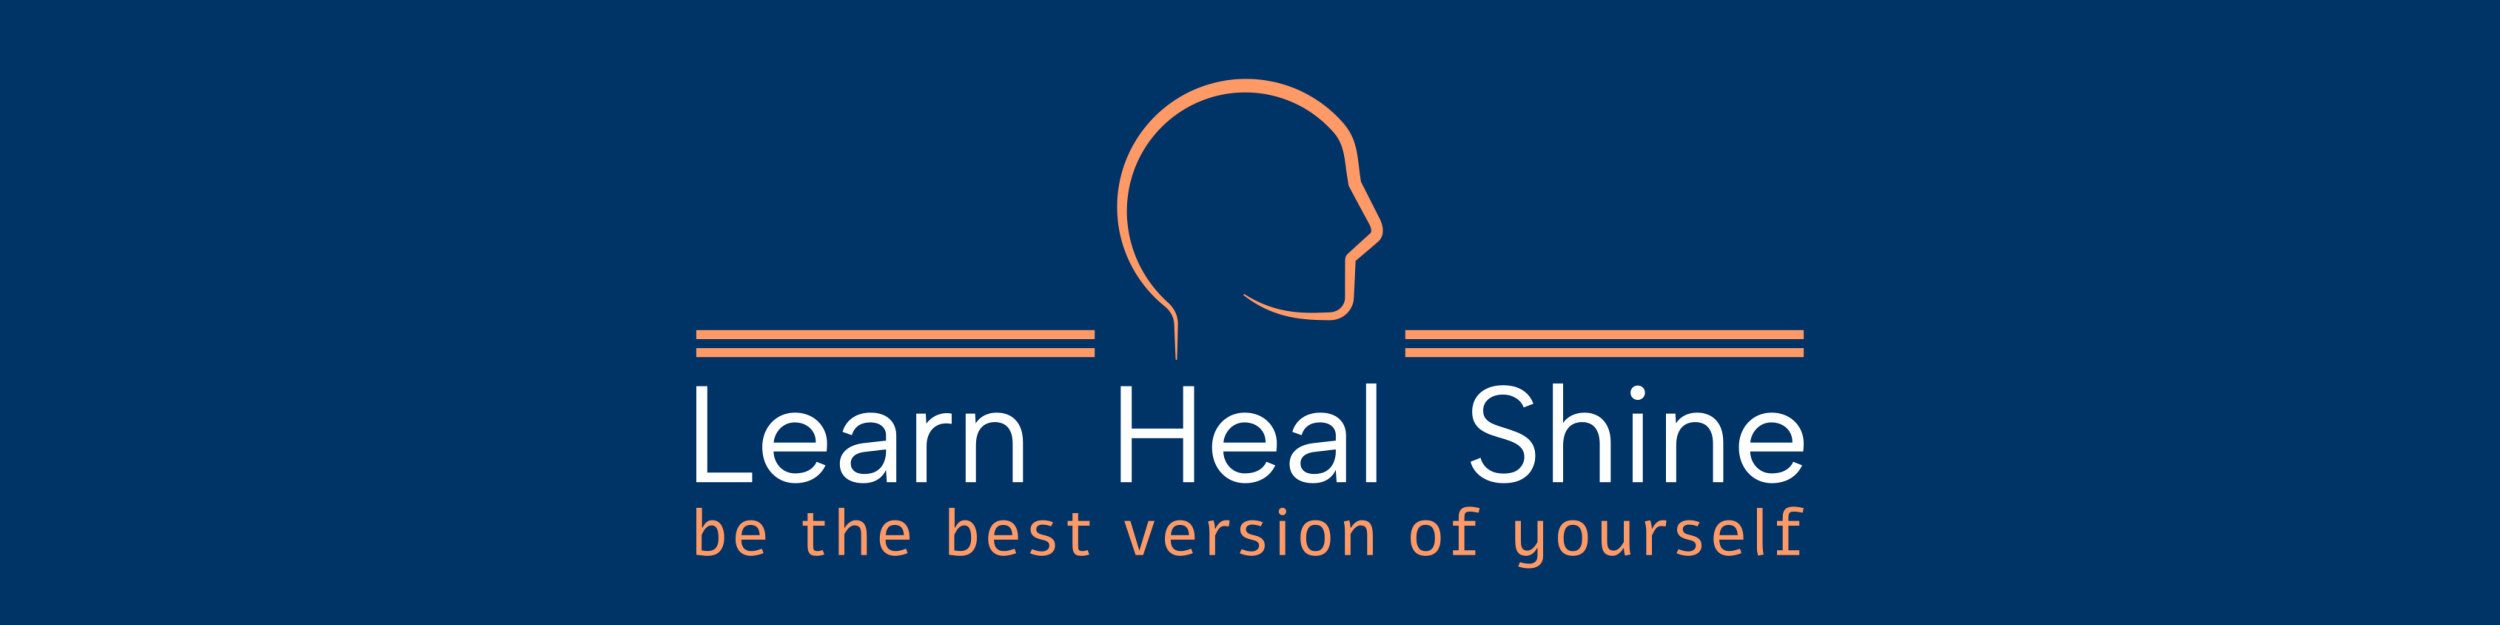 Learn Heal Shine